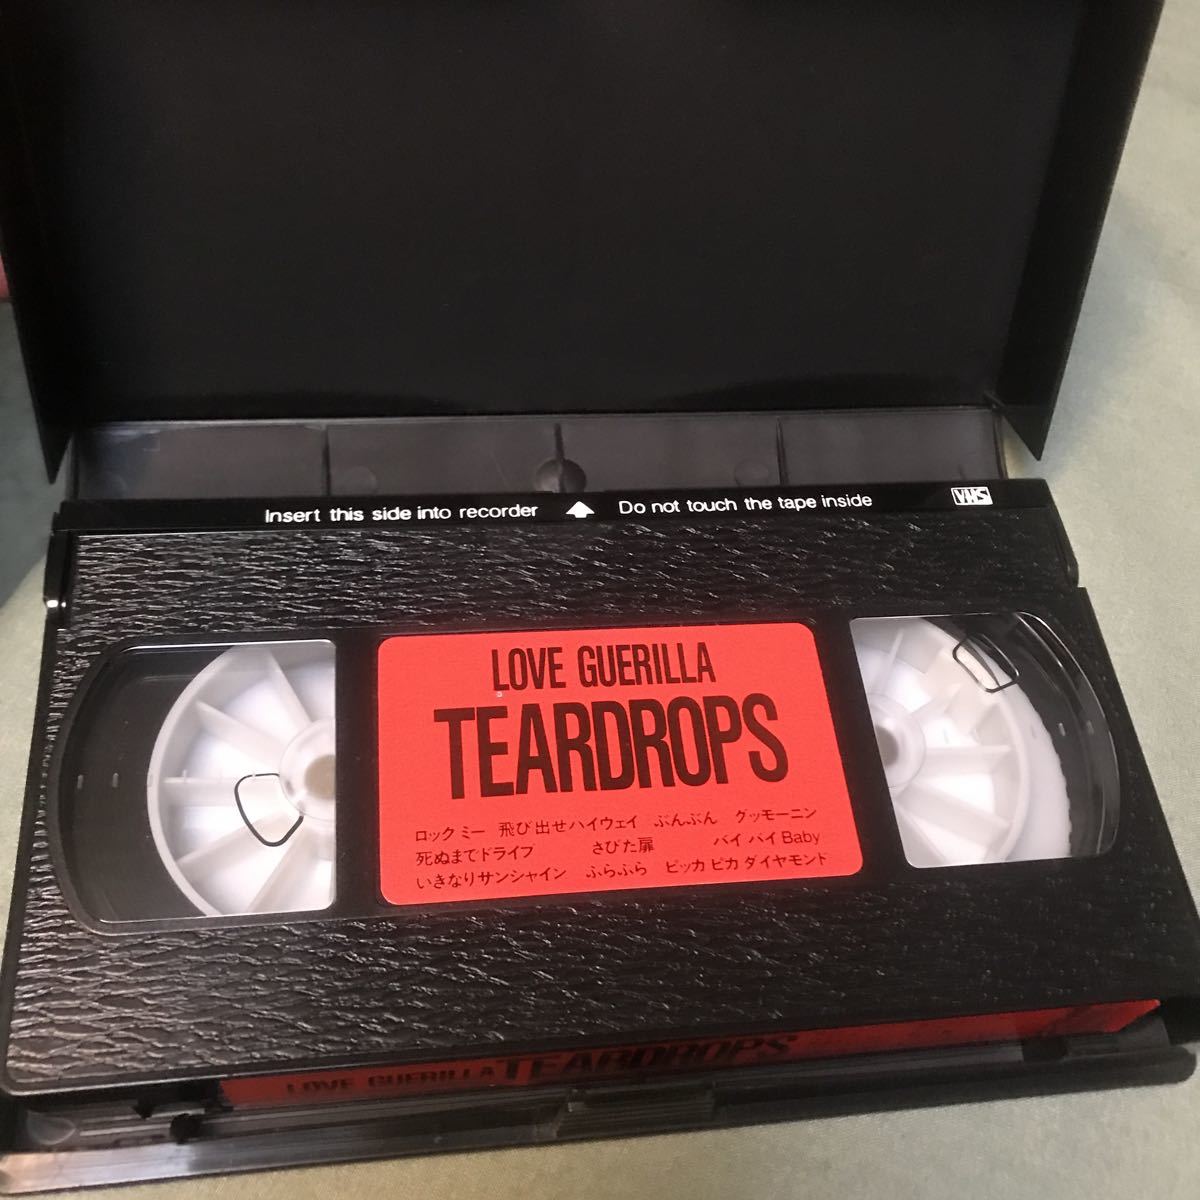 VHS видео LOVE GUERILLA TEARDROPS Yamaguchi .. Хара Teardrop s